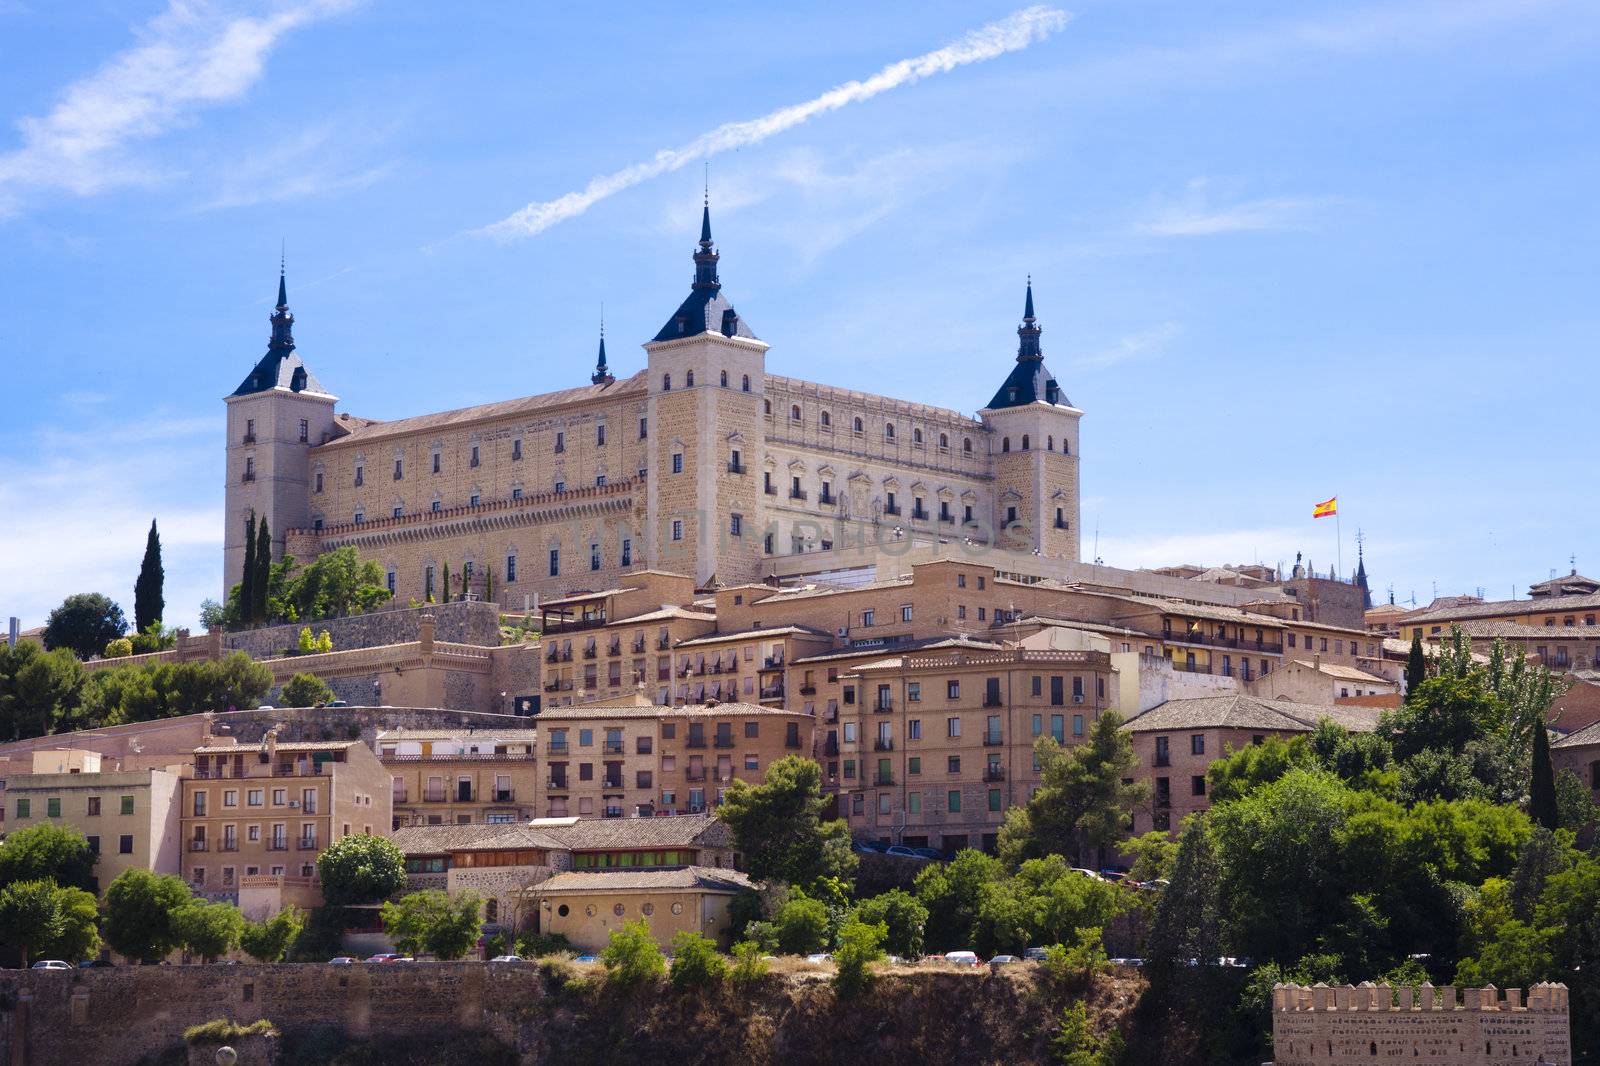 Panorama of the alcazar in Toledo, Spain